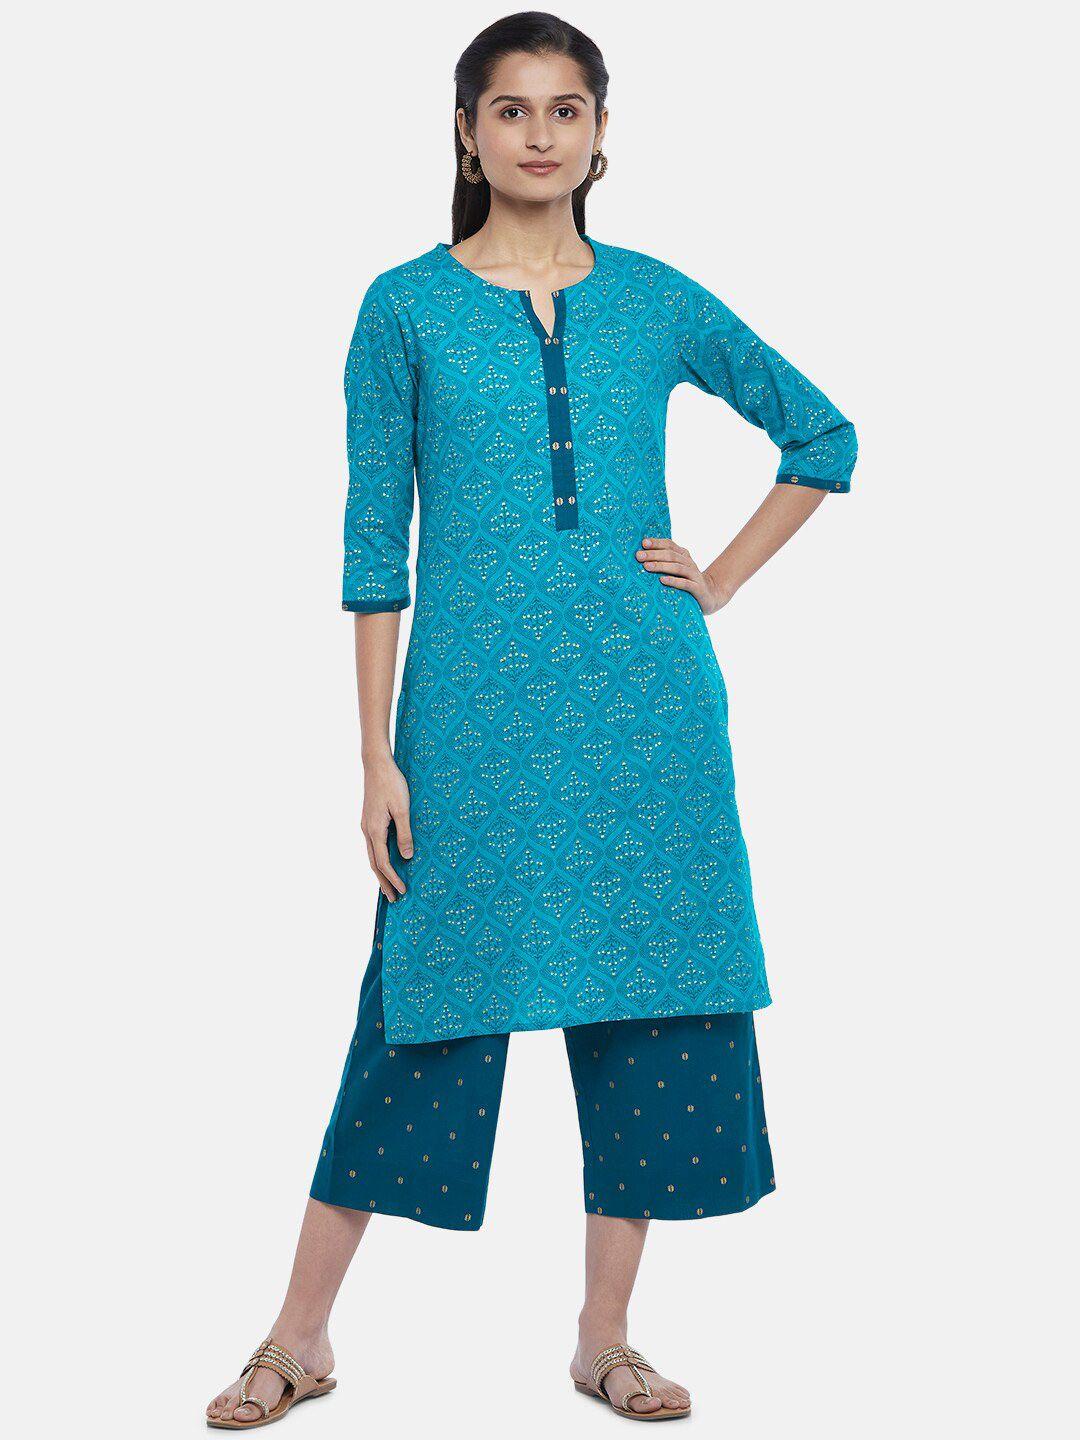 rangmanch by pantaloons women turquoise blue ethnic motifs printed pure cotton kurta set